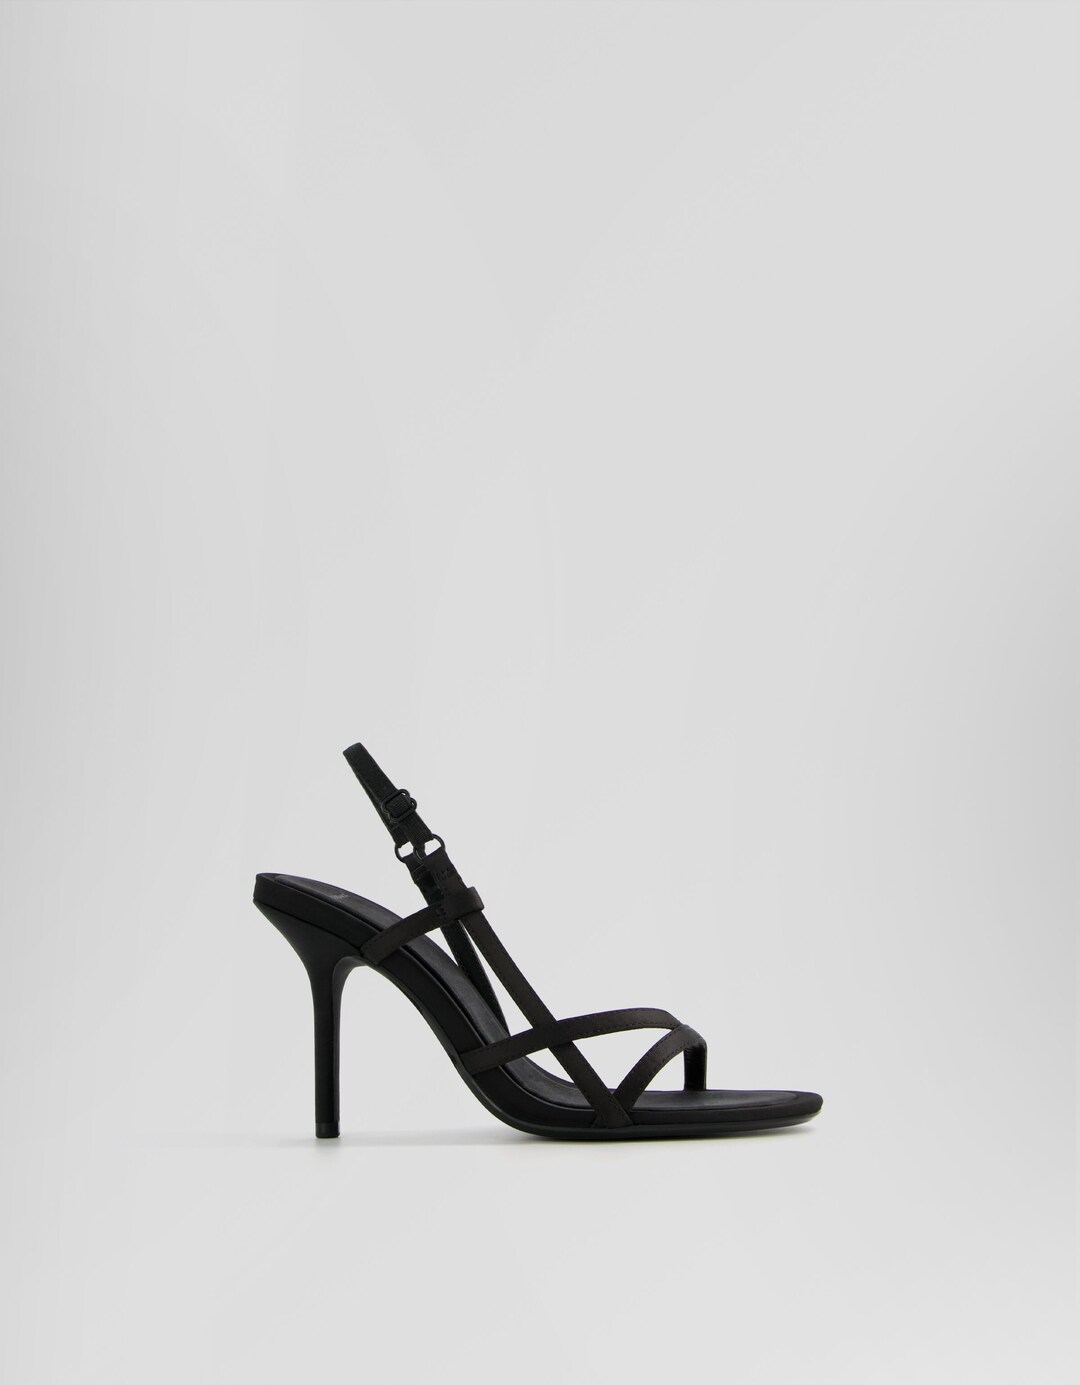 Stiletto heel sandals with adjustable straps